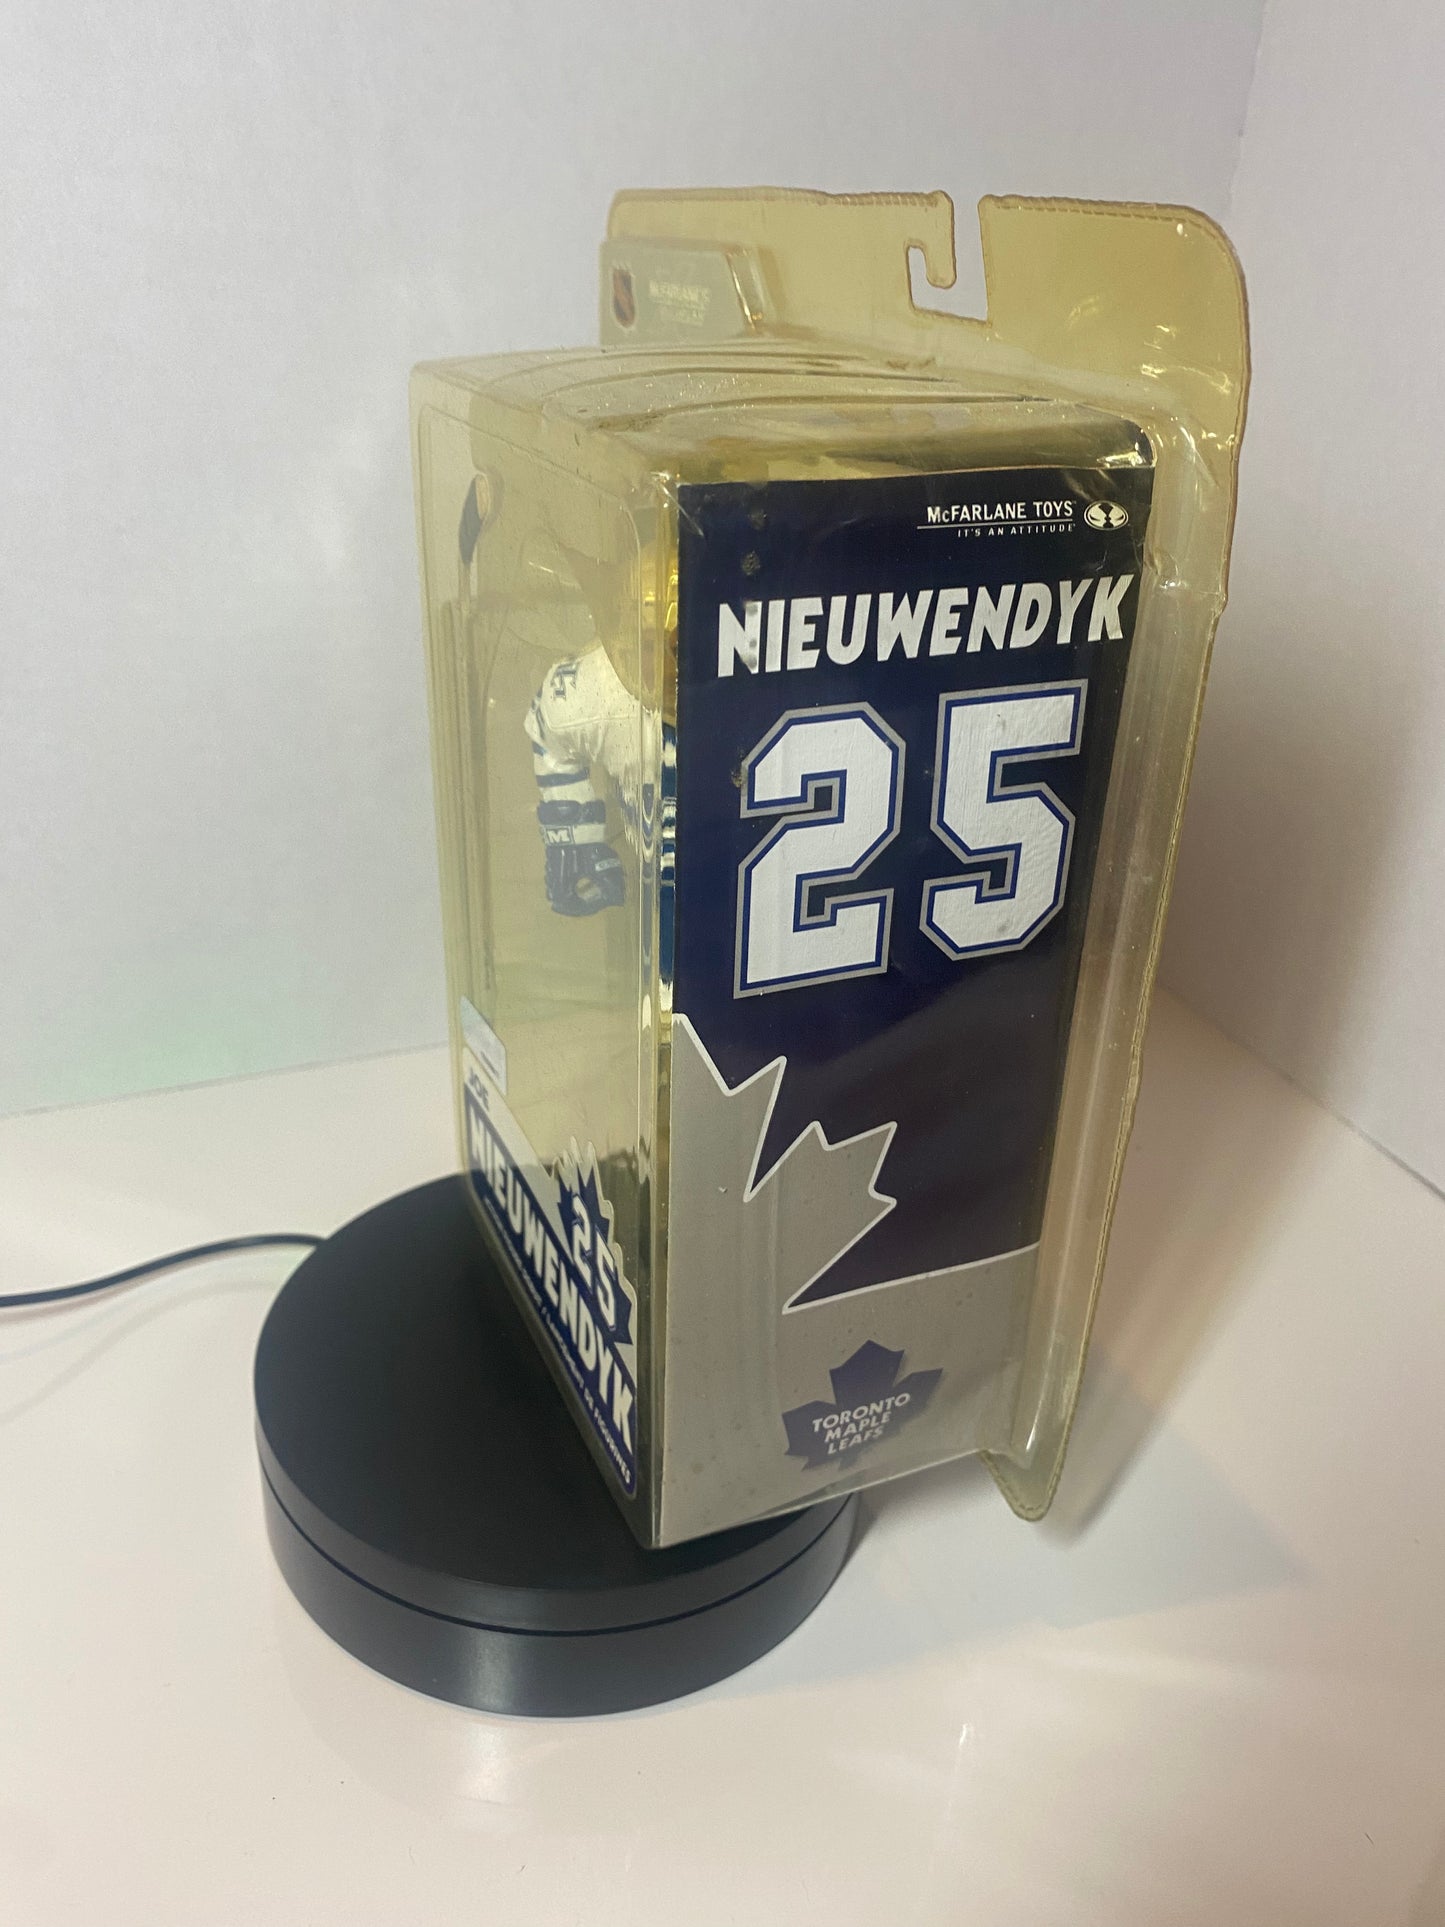 NHL Joe Nieuwendyk series 11 Toronto Maple Leafs